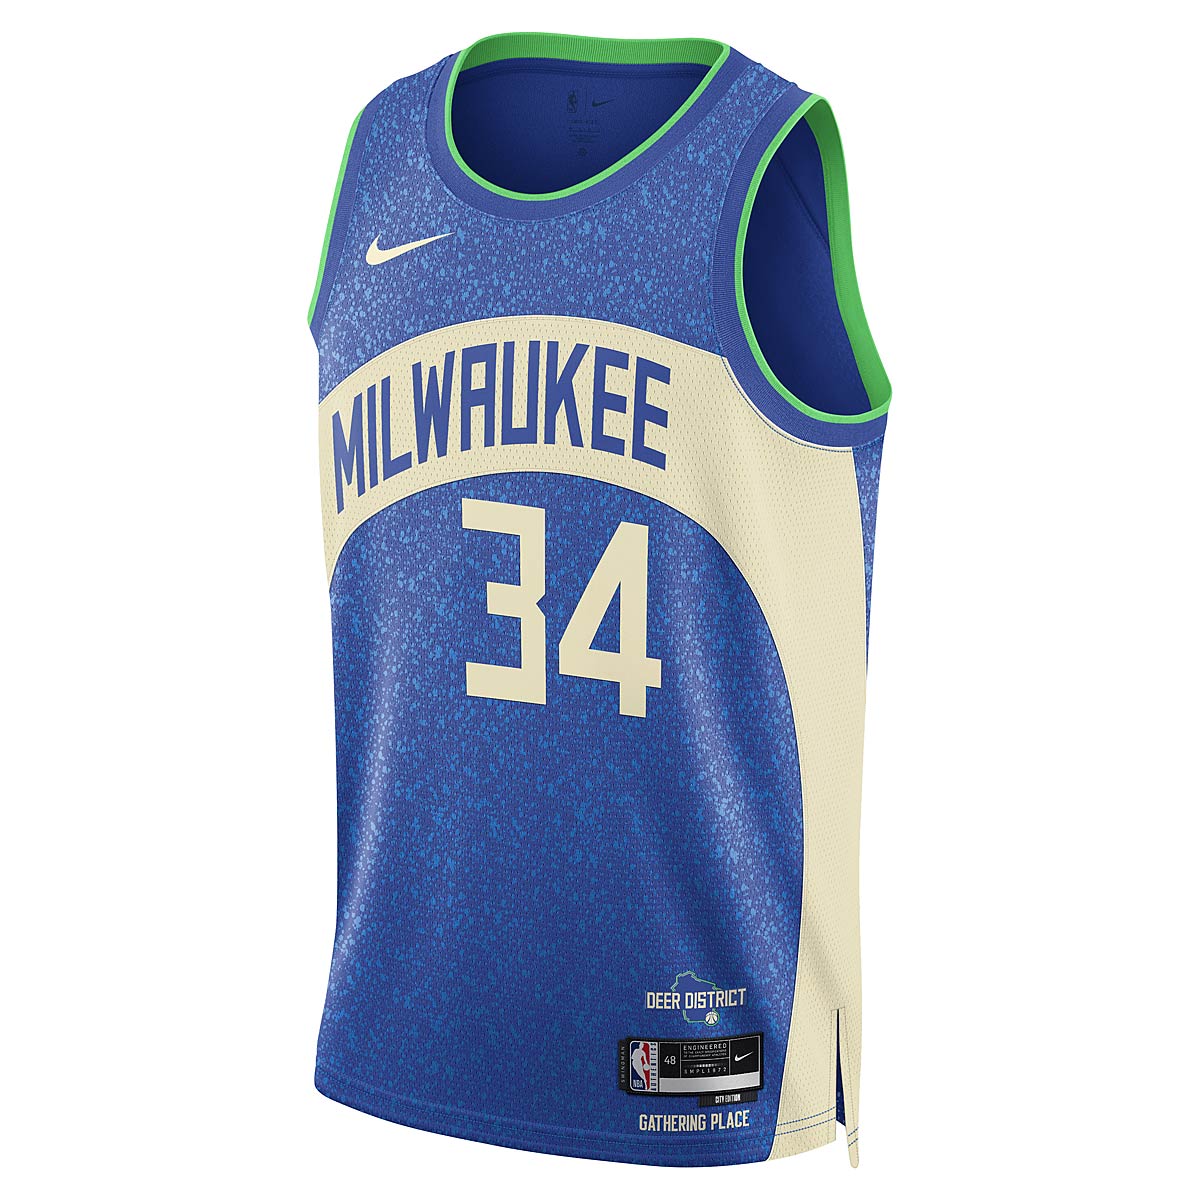 Nike NBA Milwaukee Bucks Dri-fit City Edition Swingman Jersey Giannis Antetokounmpo, Photo Blau/schwarz-weiß-university Rot XL